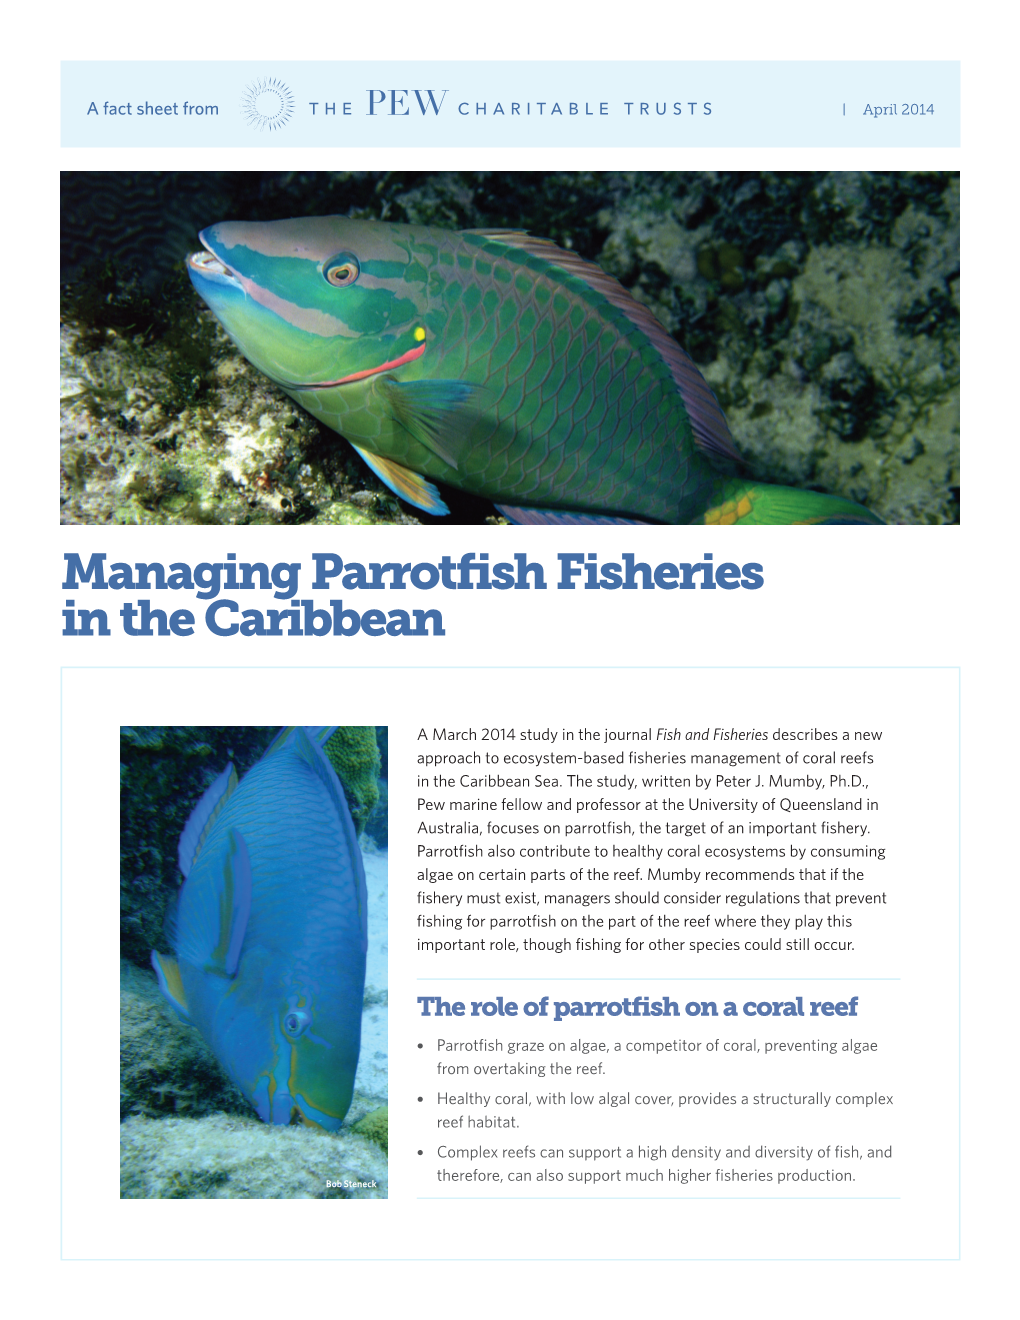 Managing Parrotfish Fisheries in the Caribbean